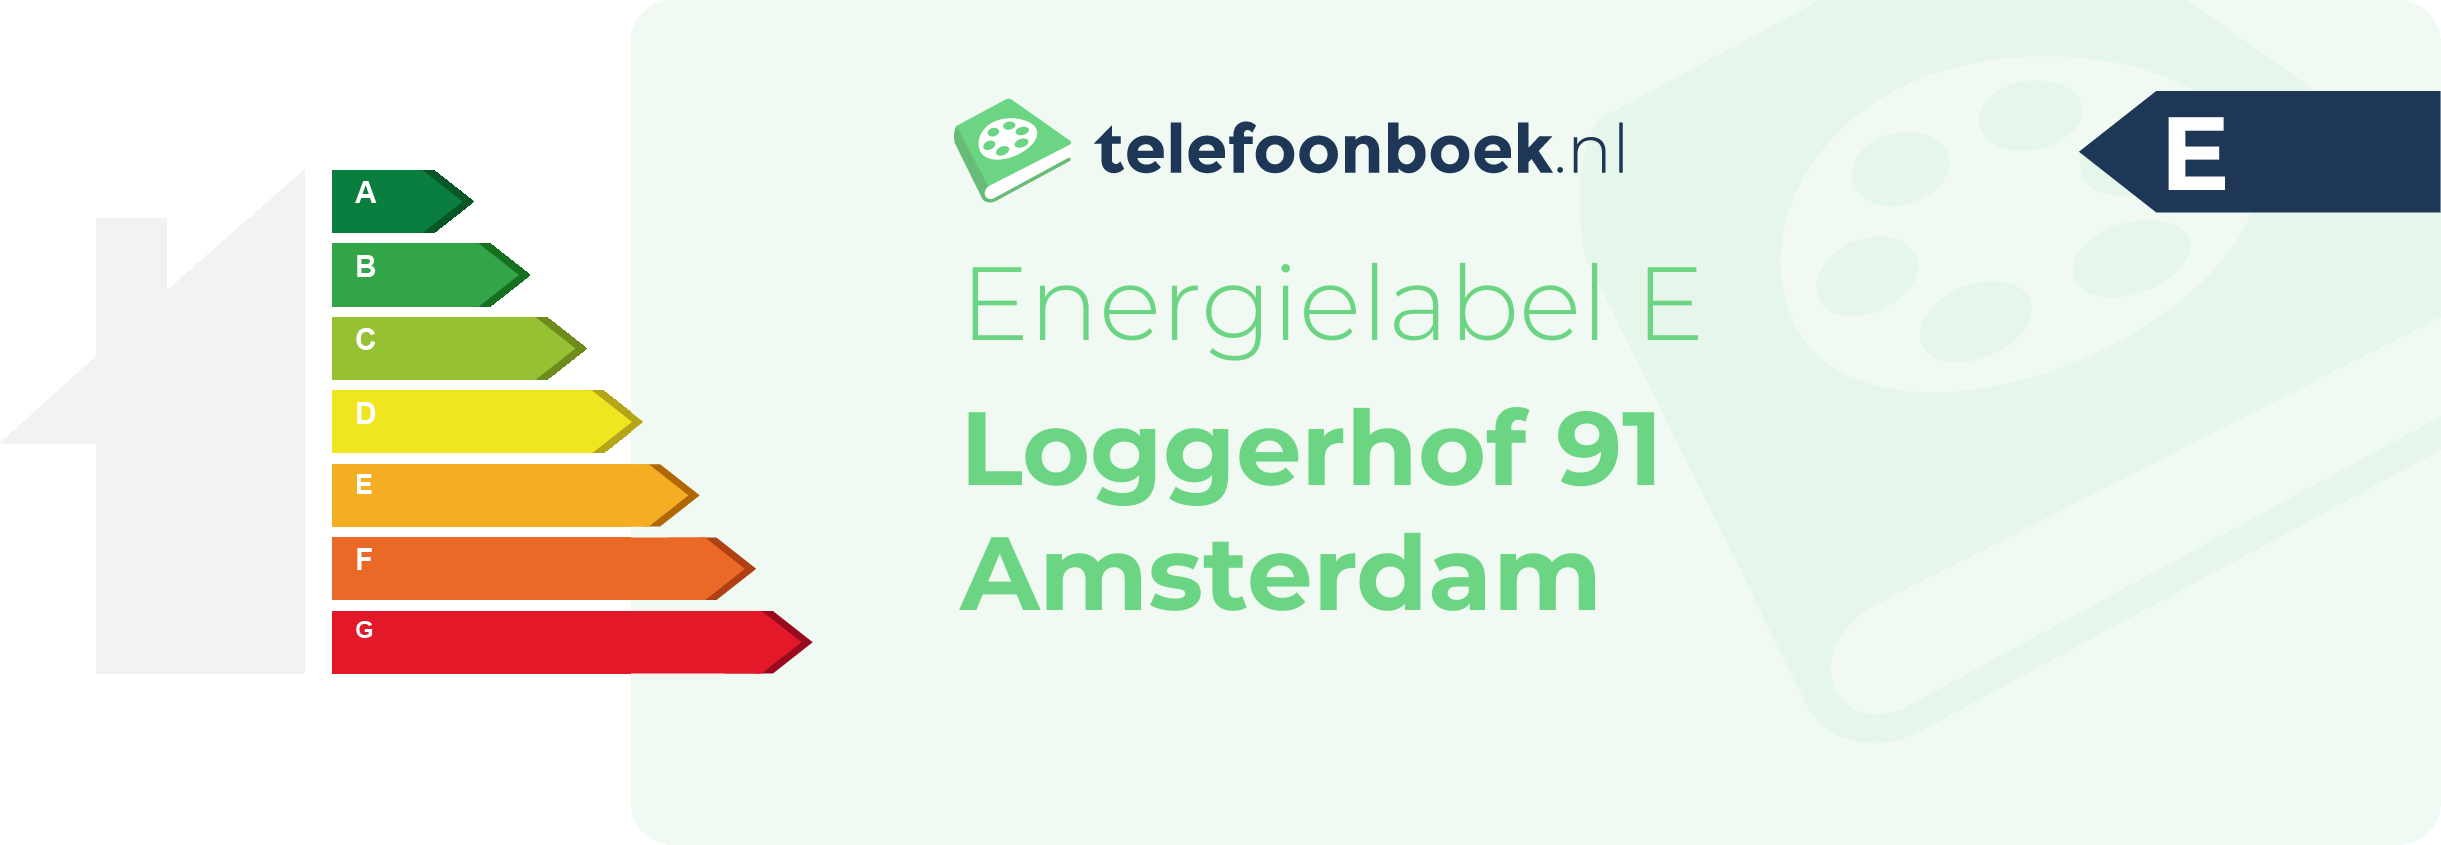 Energielabel Loggerhof 91 Amsterdam